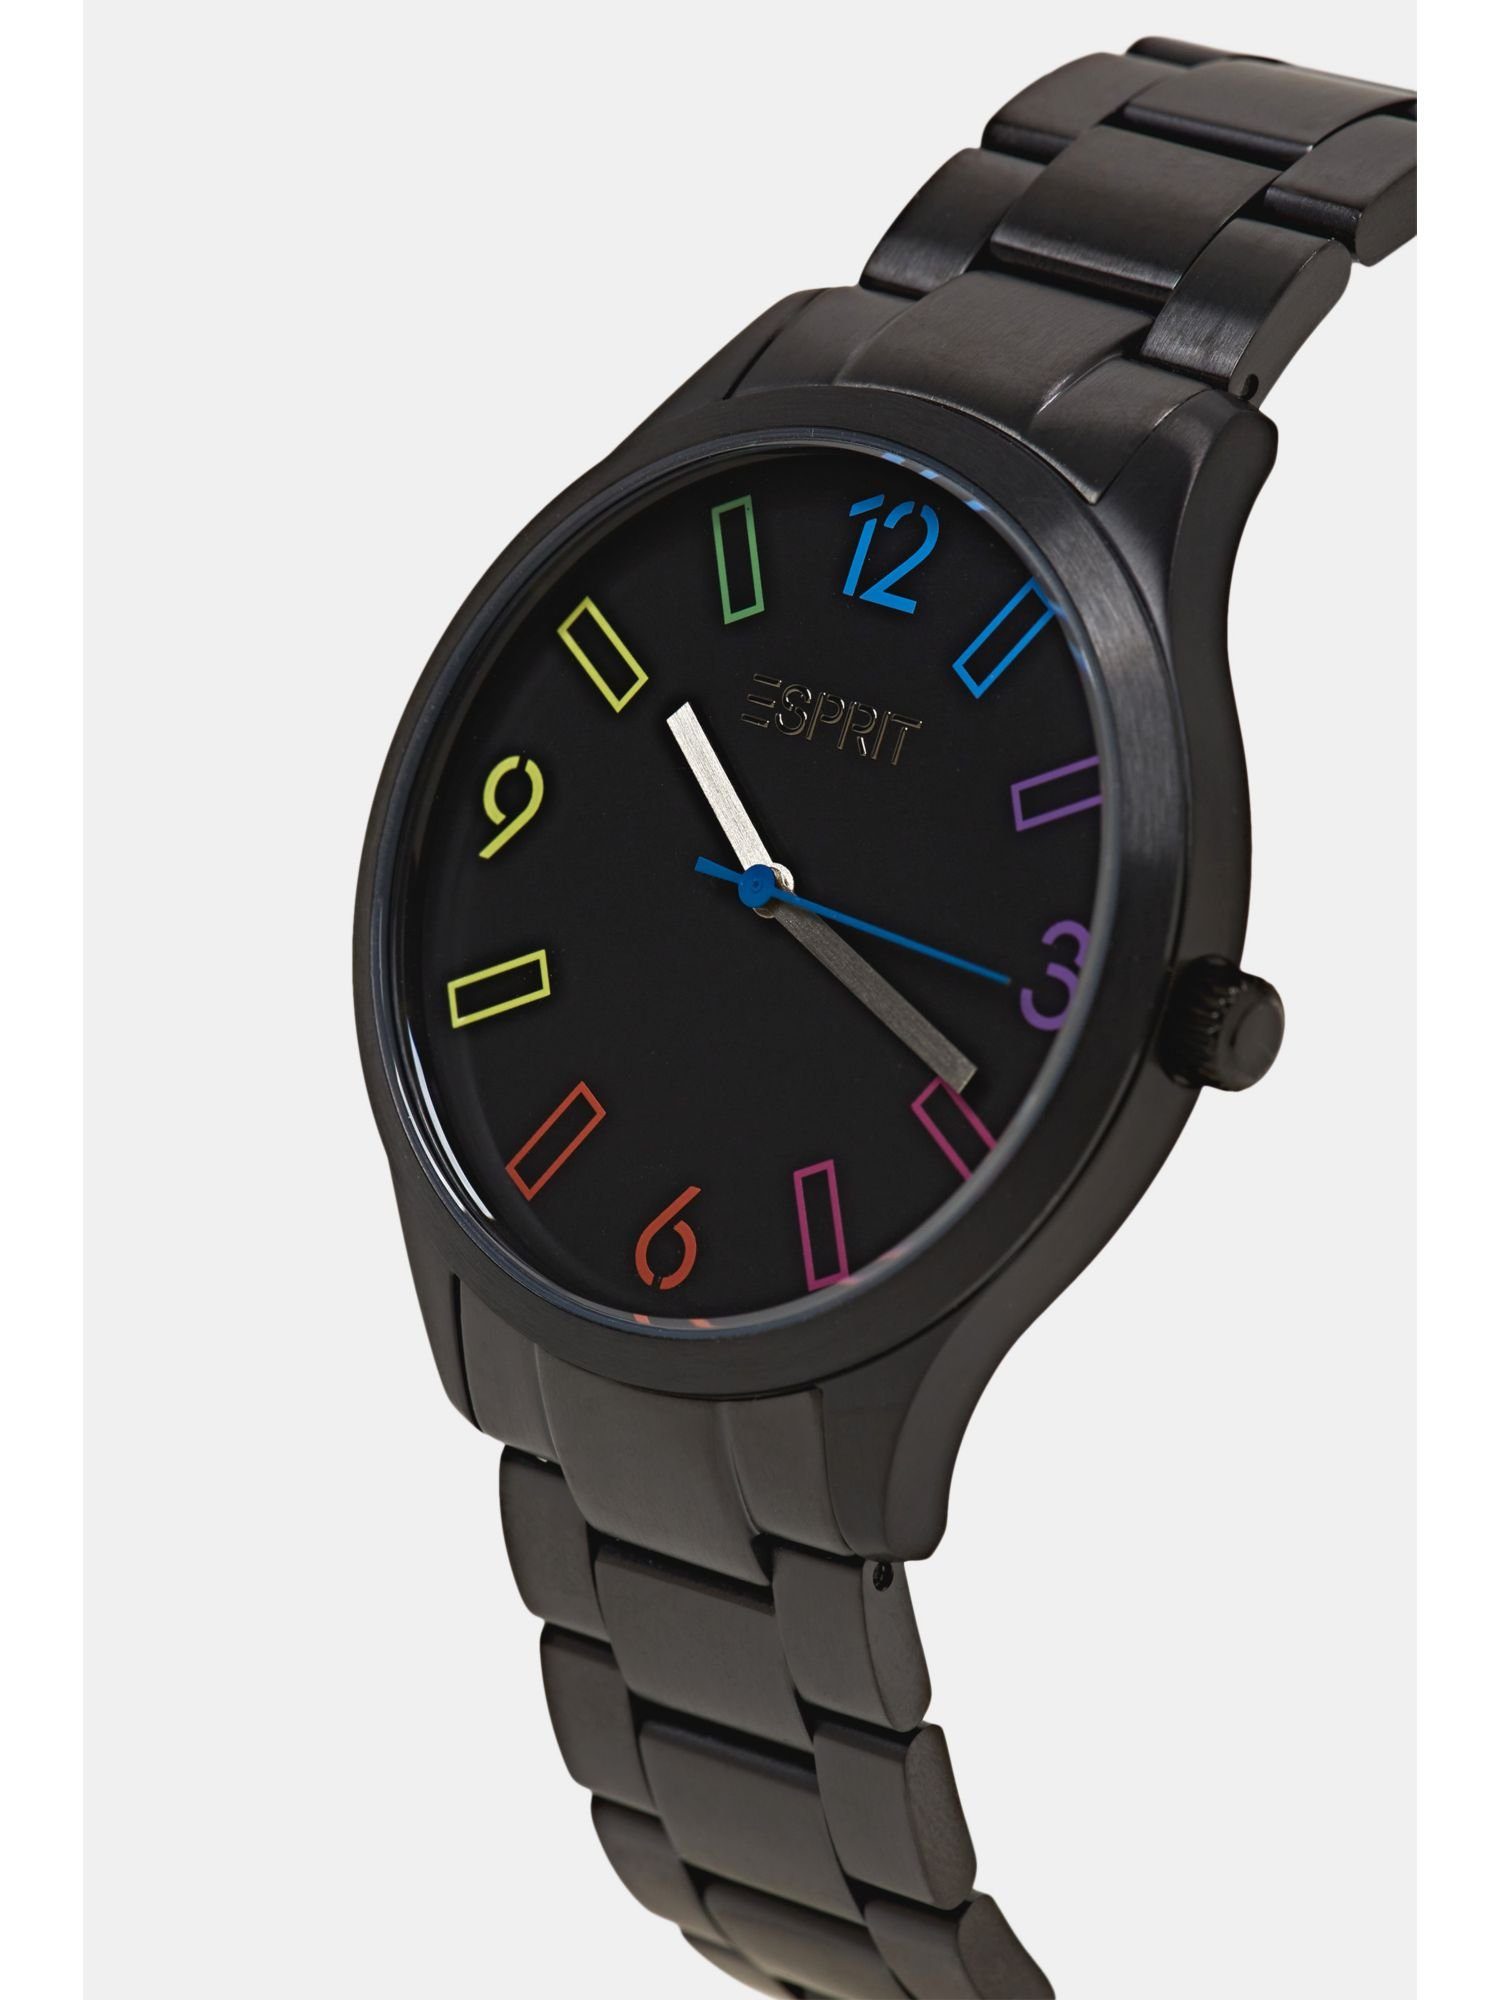 Esprit Ziffernblatt Quarzuhr Edelstahl-Armbanduhr mit mehrfarbigem